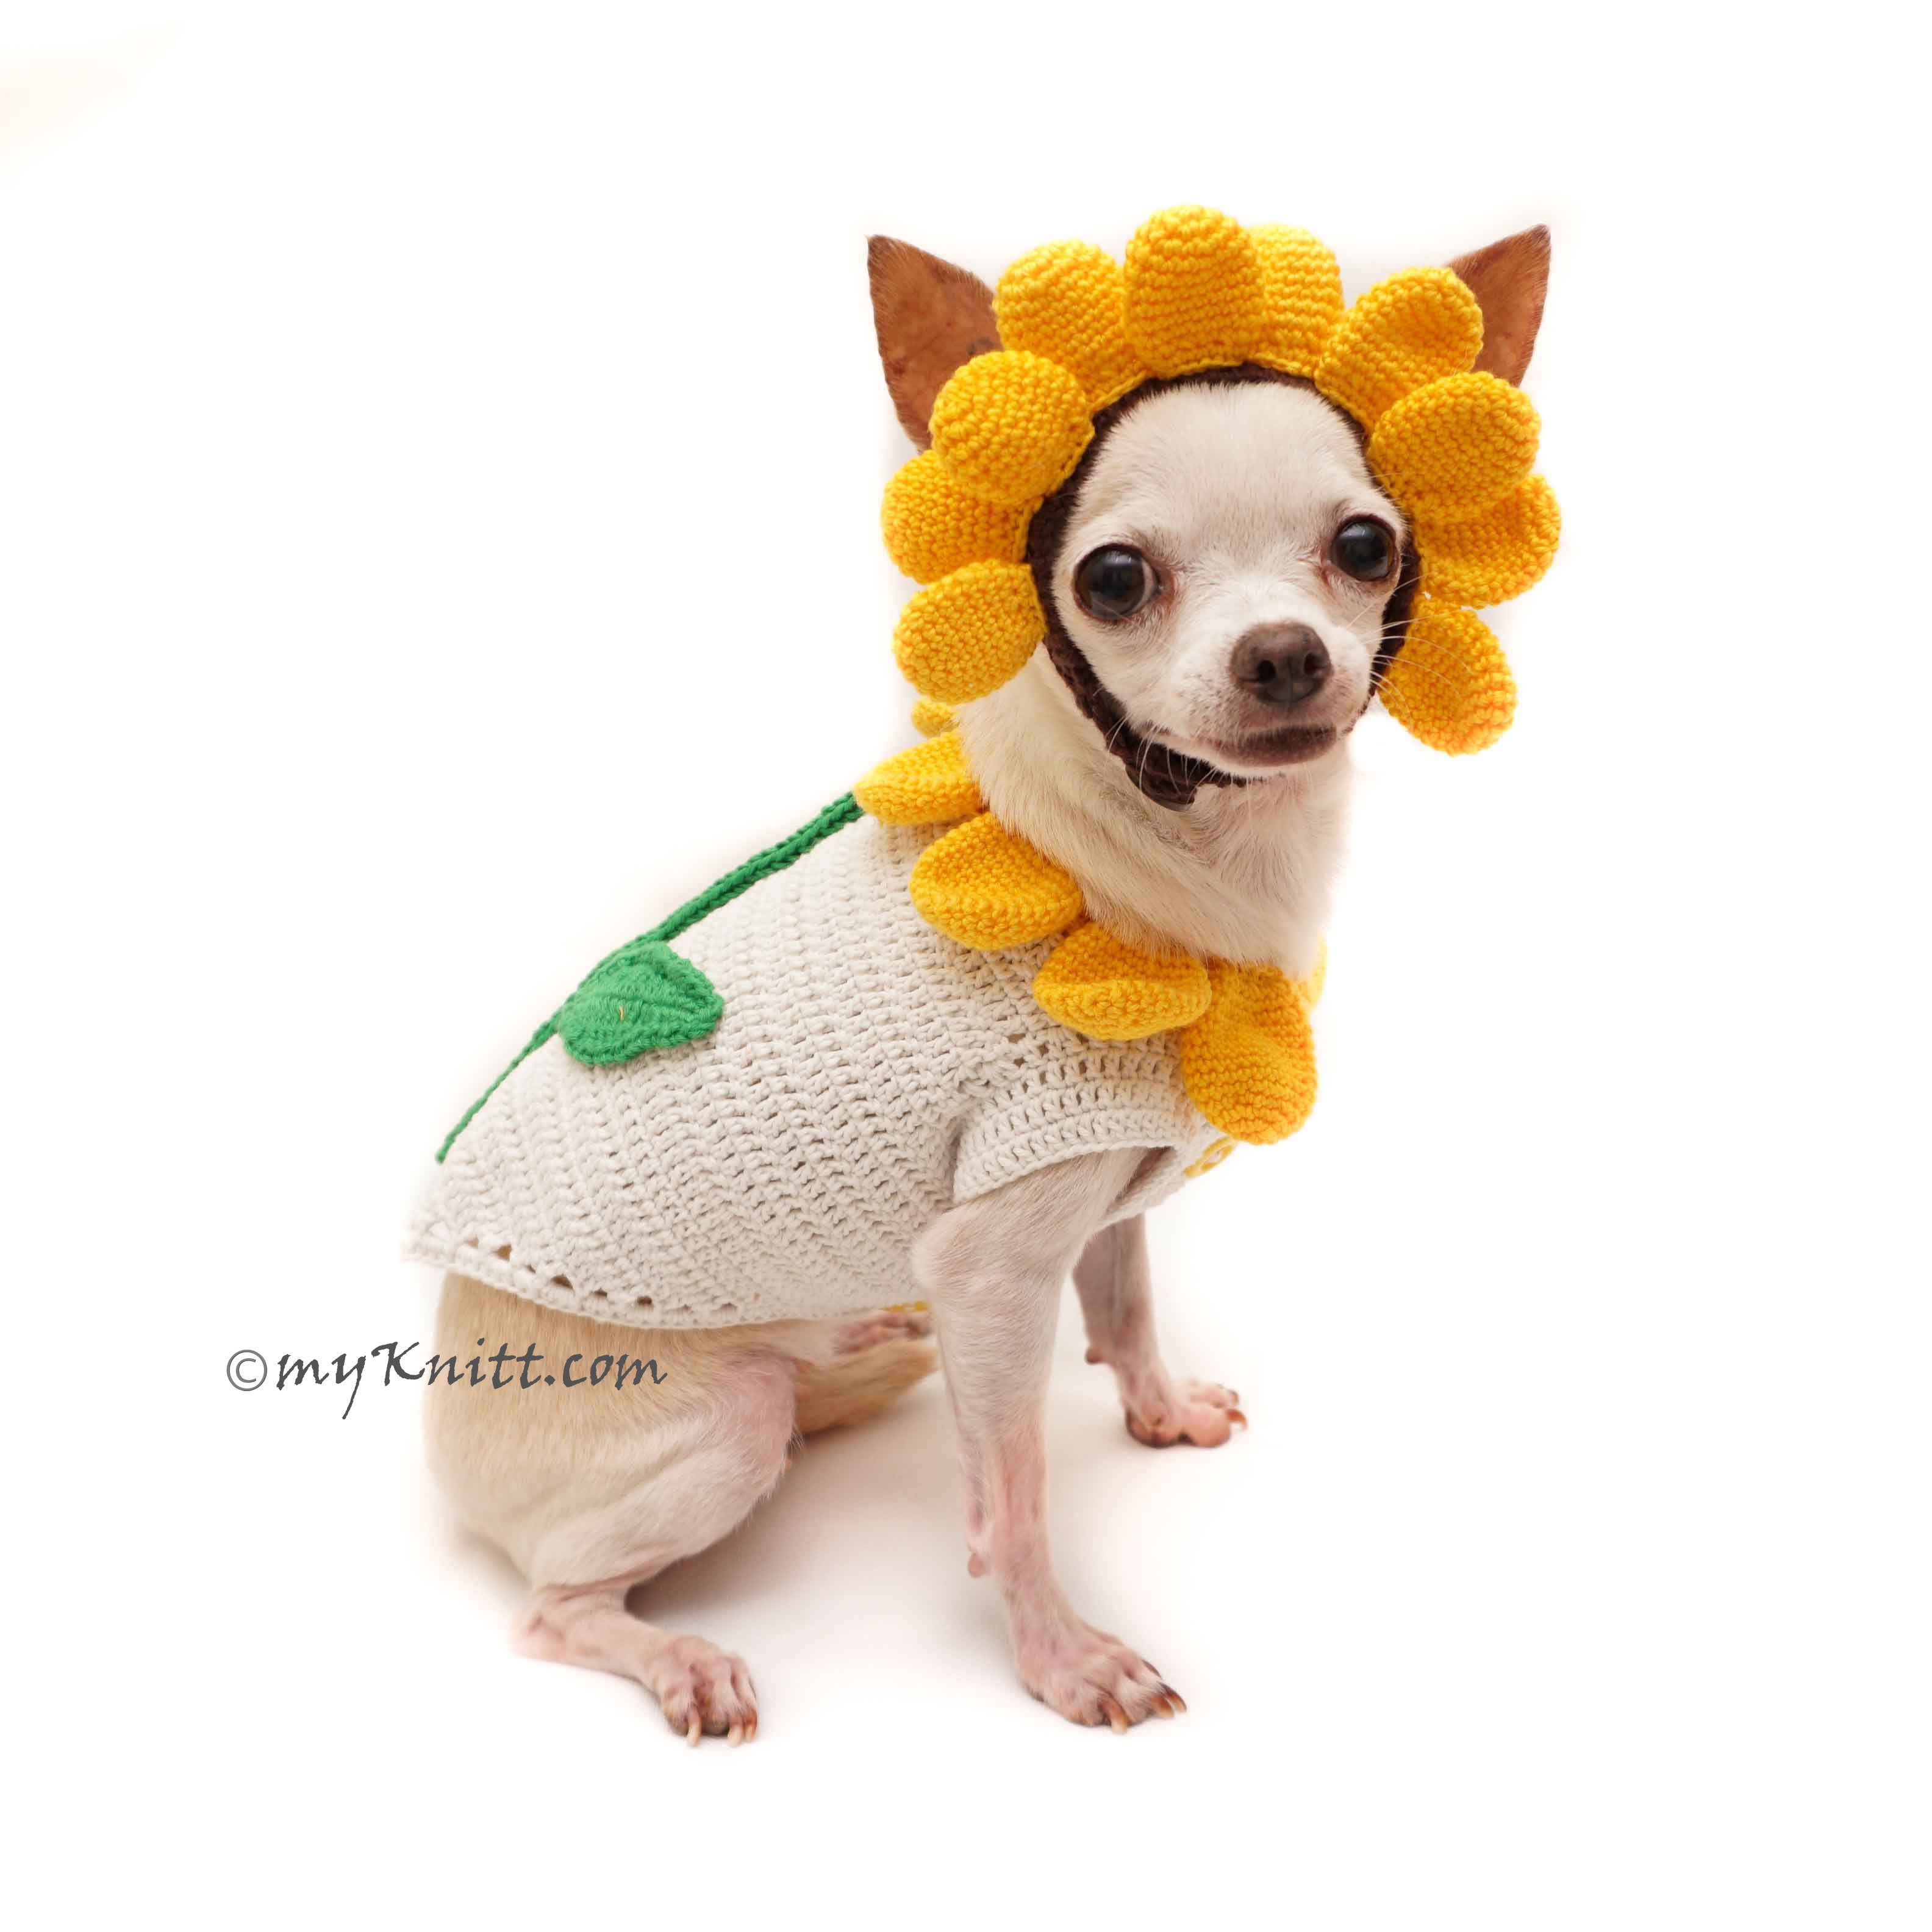 Sunflower Costume for Dogs Cute Pet Halloween Costume DF94 by Myknitt